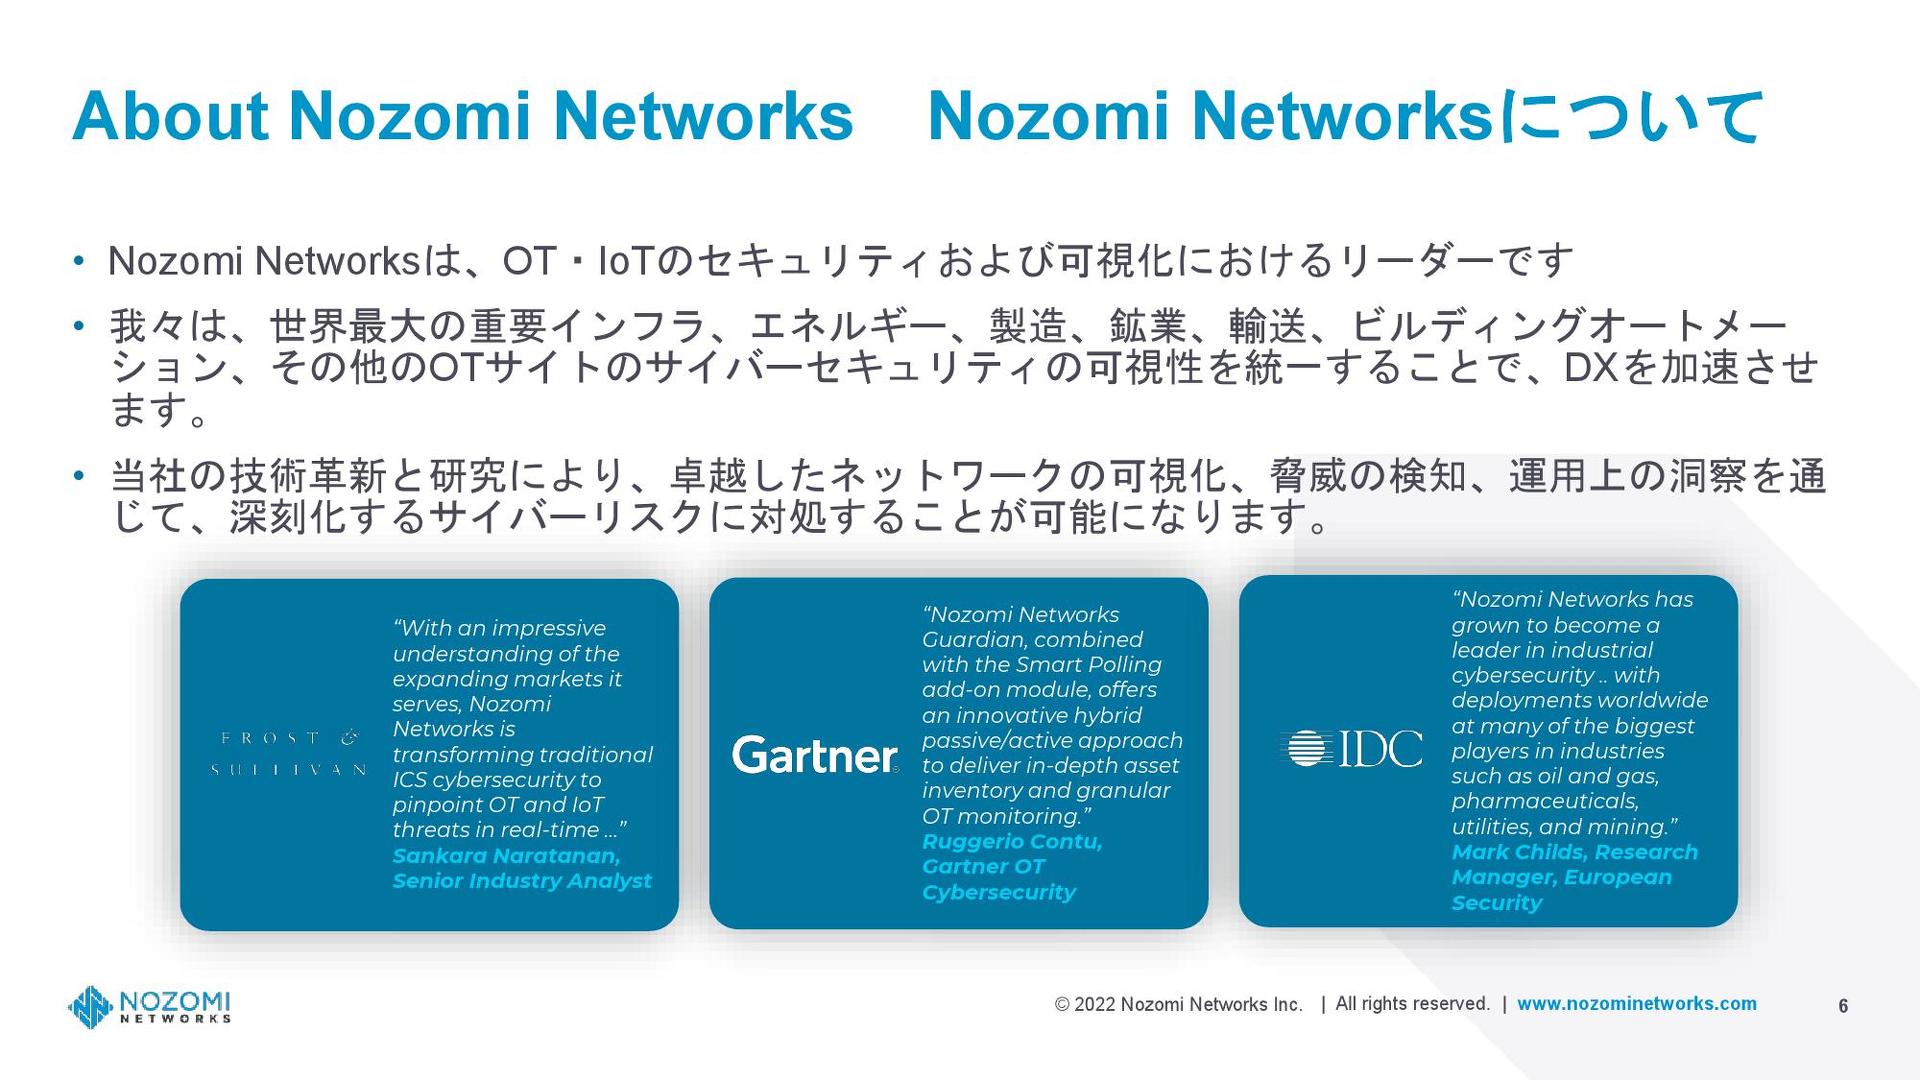 Nozomi Networks̊TvmNbNĊgn oFNozomi Networks